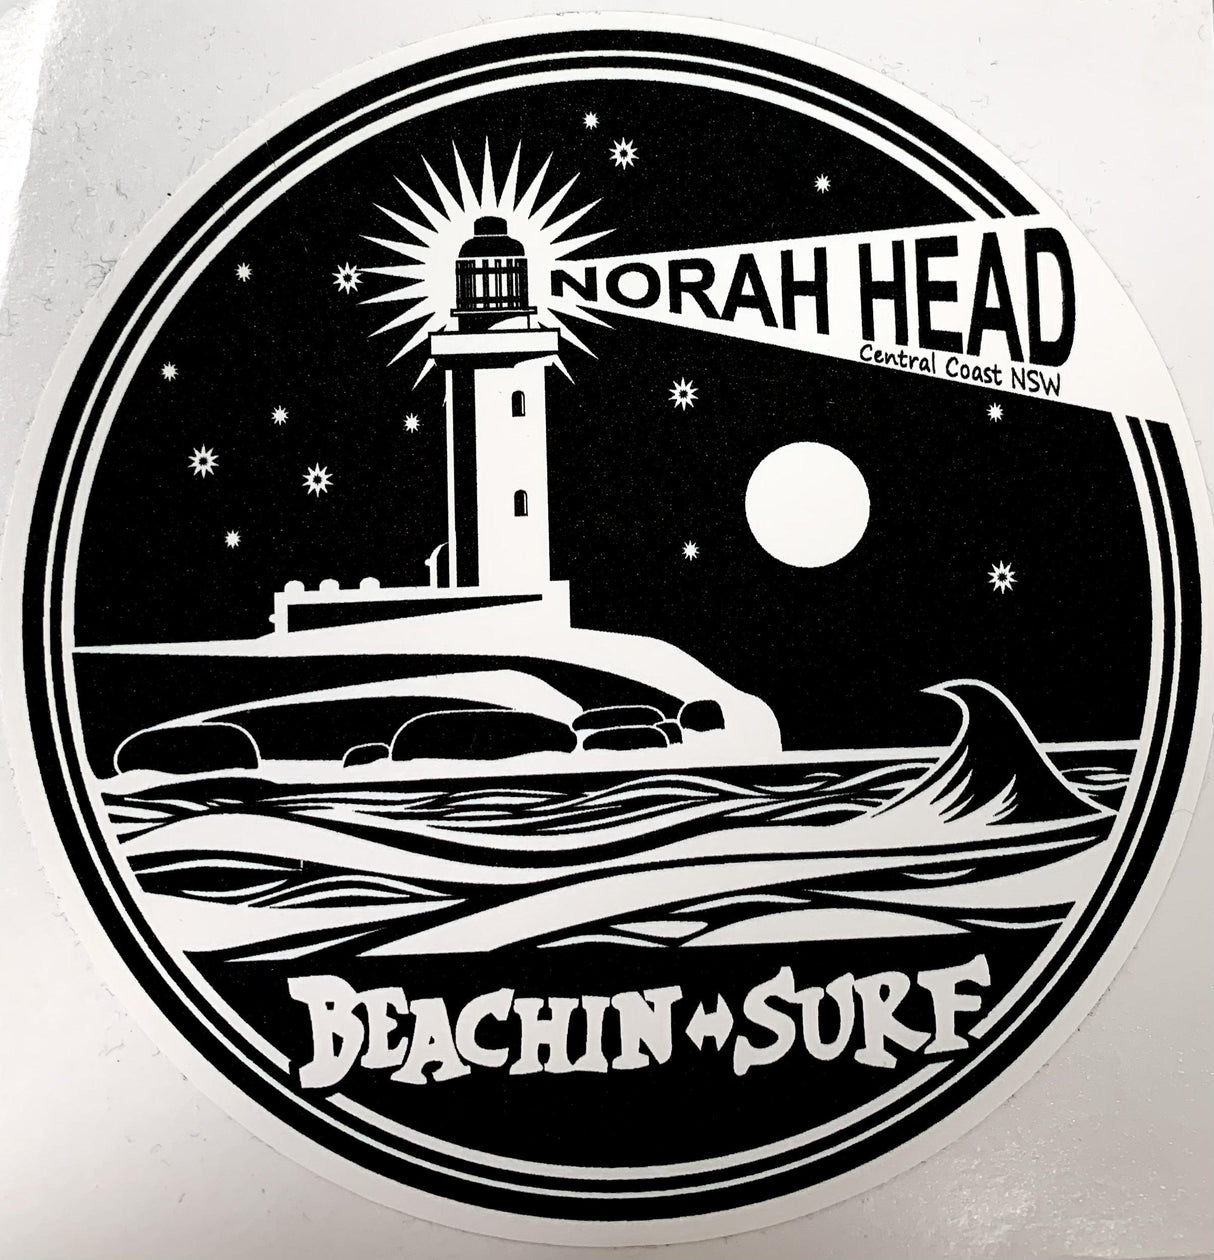 Beachin Surf Light House Sticker | BEACHIN SURF | Beachin Surf